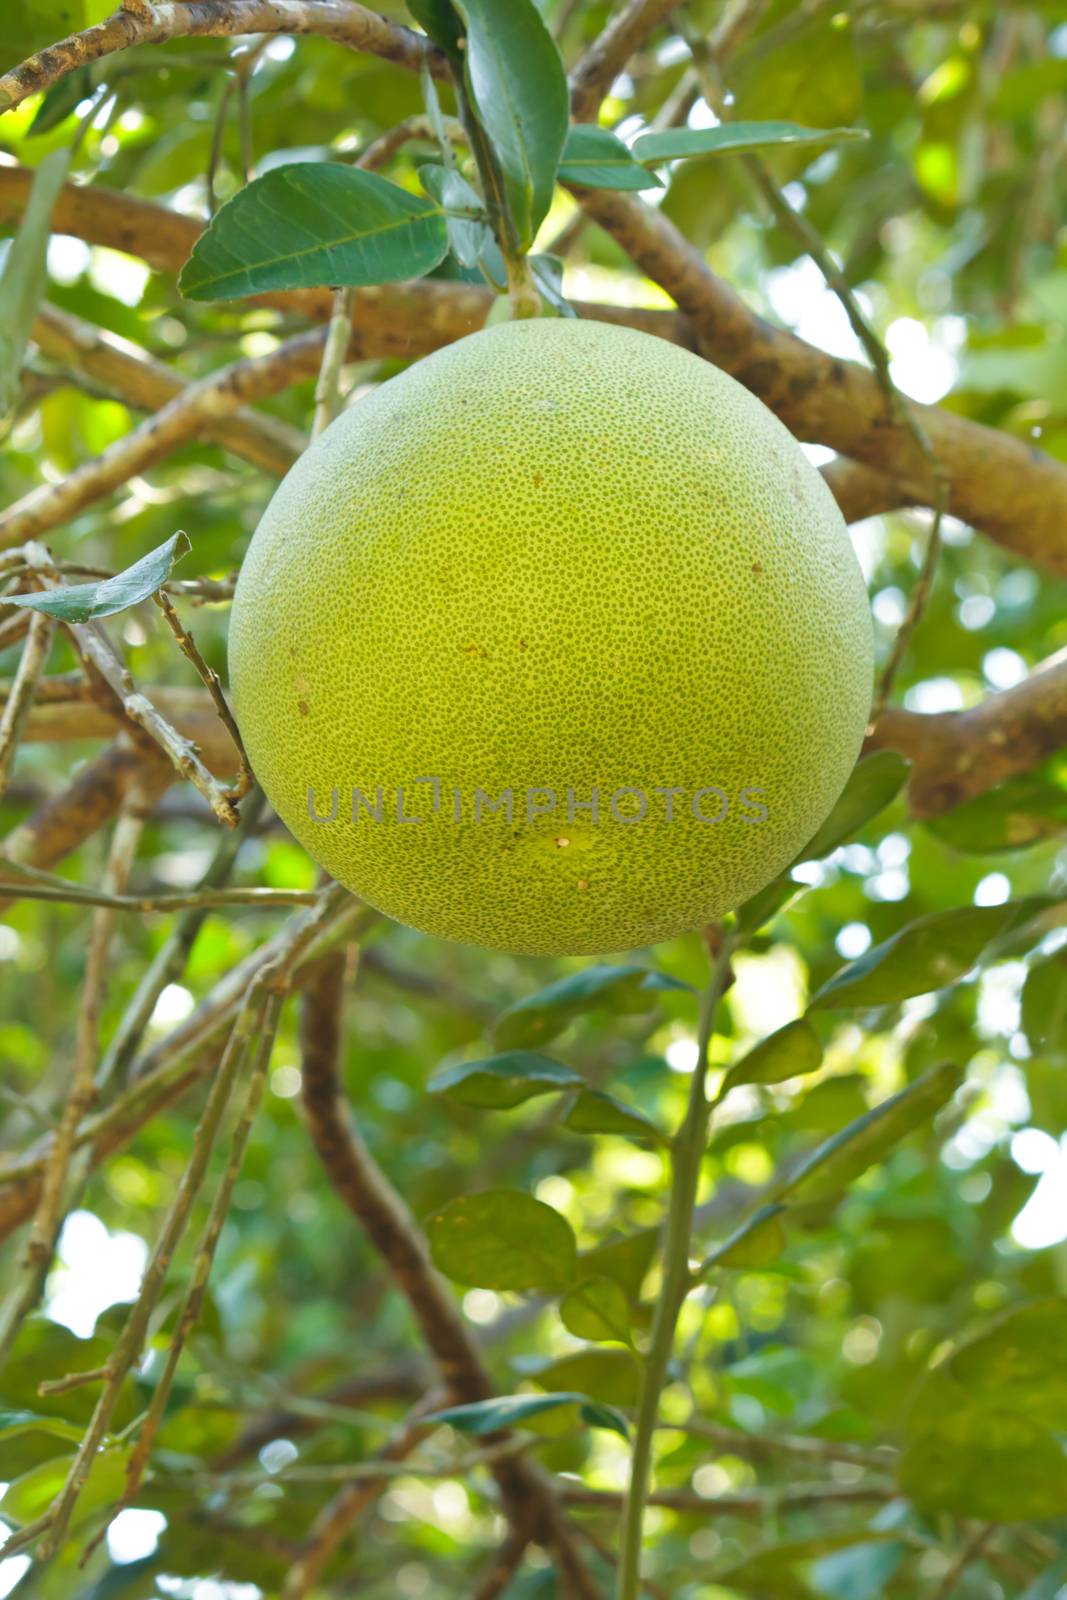 green grapefruit growing on tree, thailand.